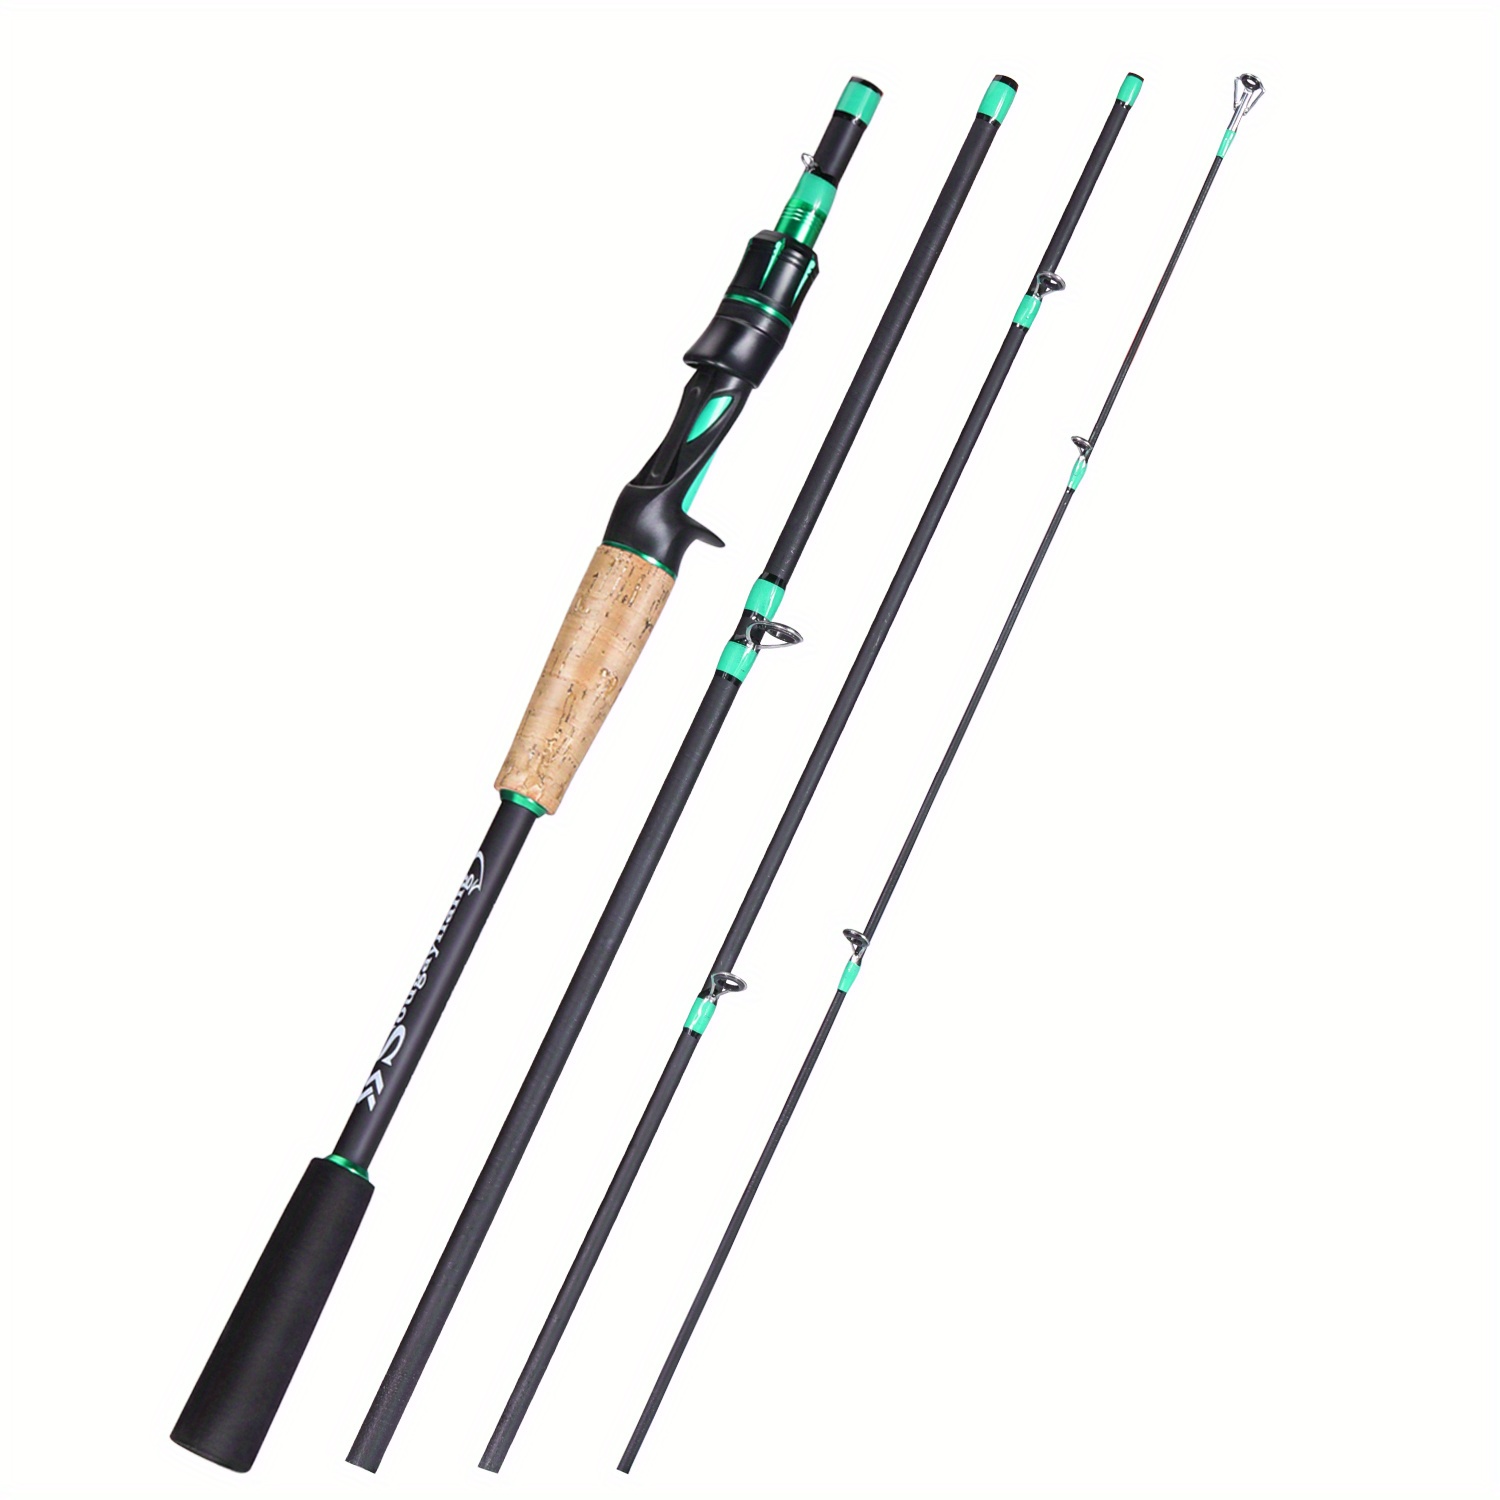 Sougayilang L M H Cork Handle Feeder Fishing Rod Spinning Rods 3M Travel  Rod De Pesca Carp Fishing Pole